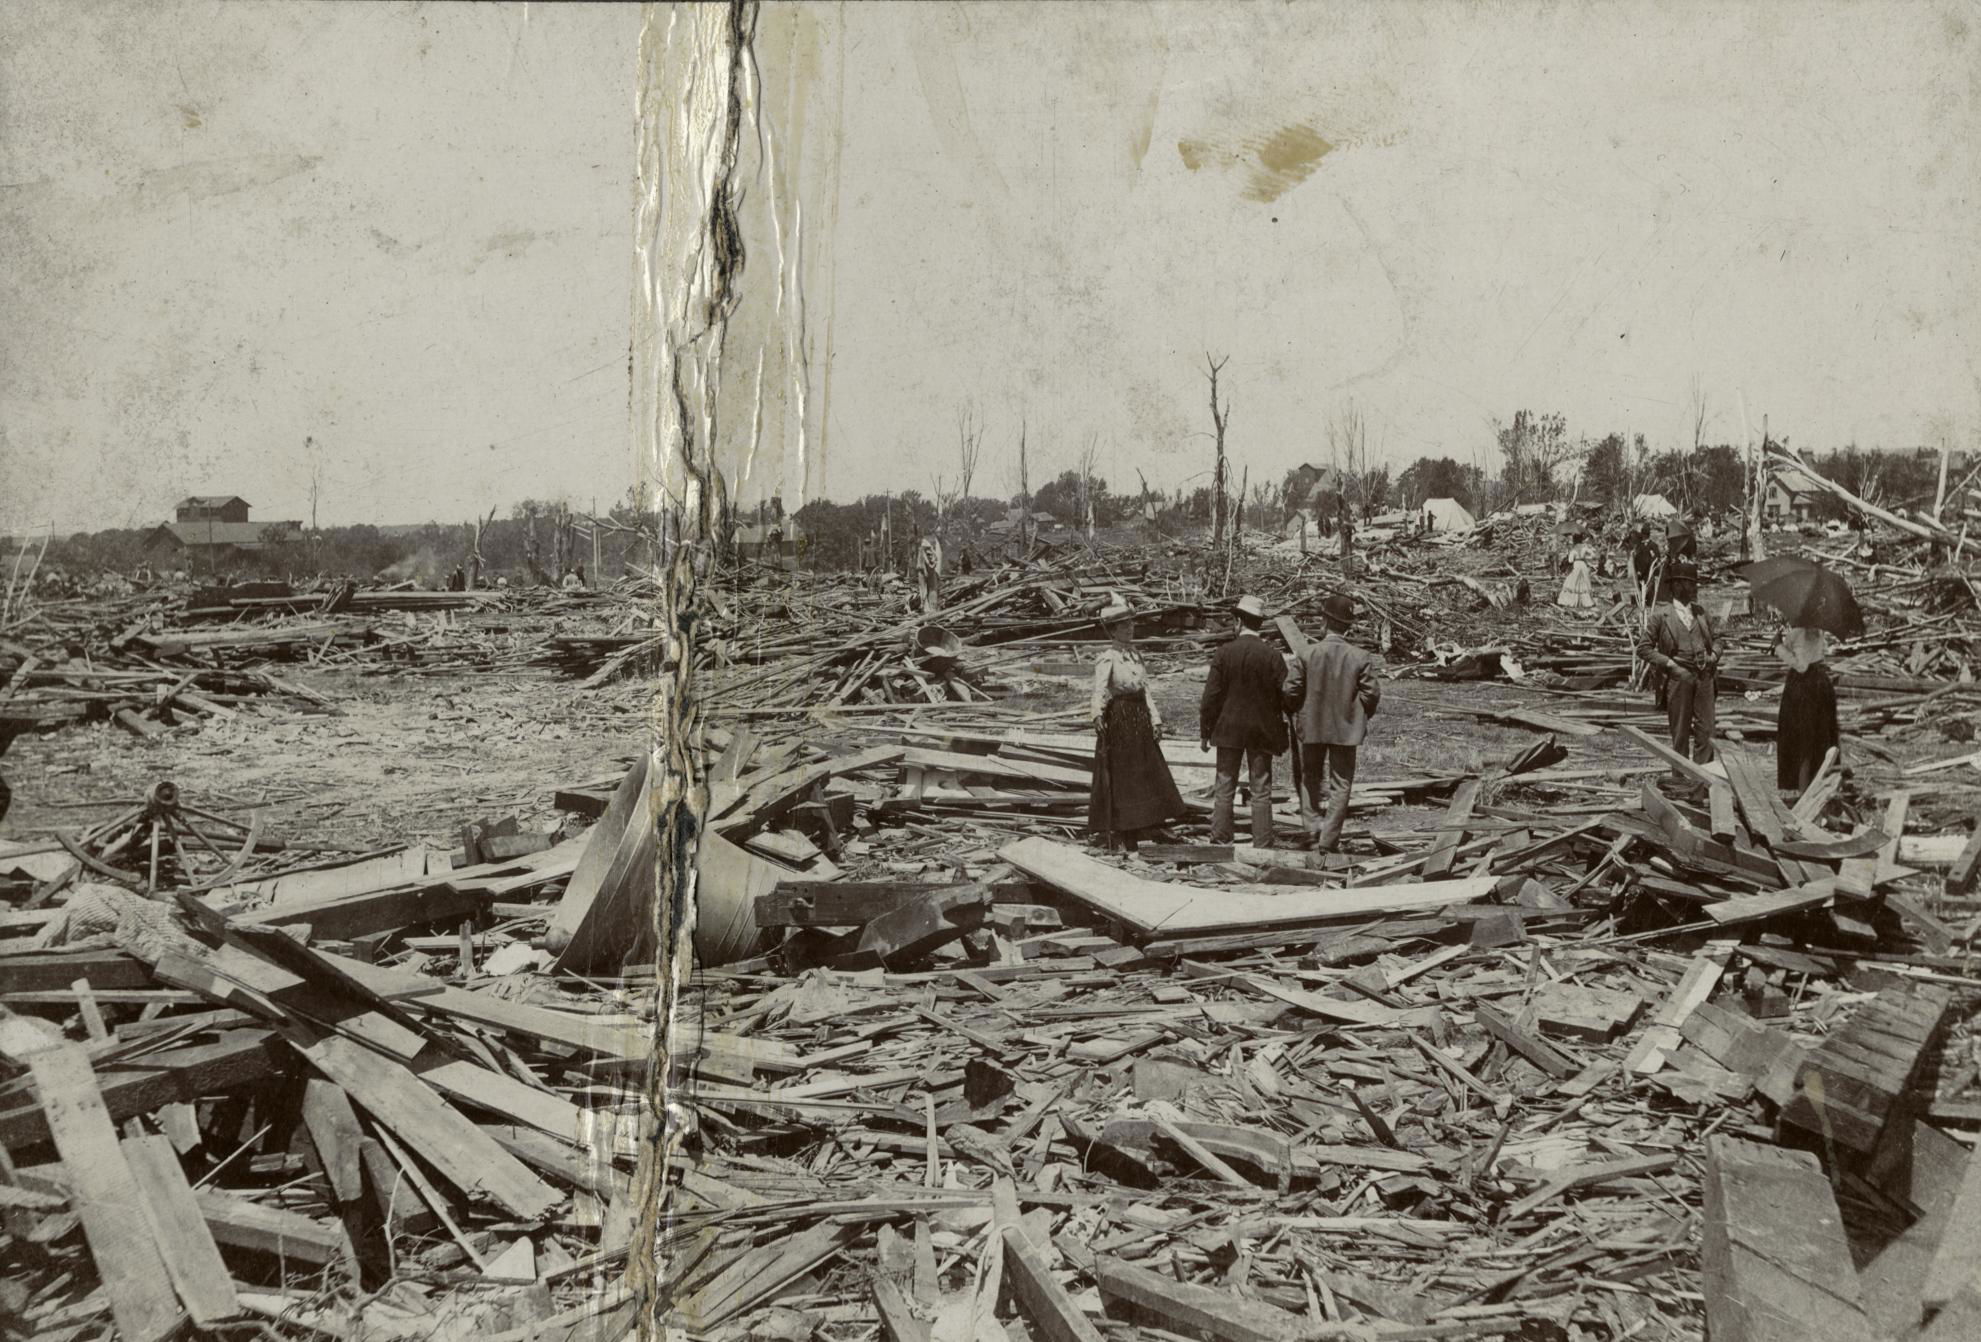 Aftermath of 1899 New Richmond Tornado